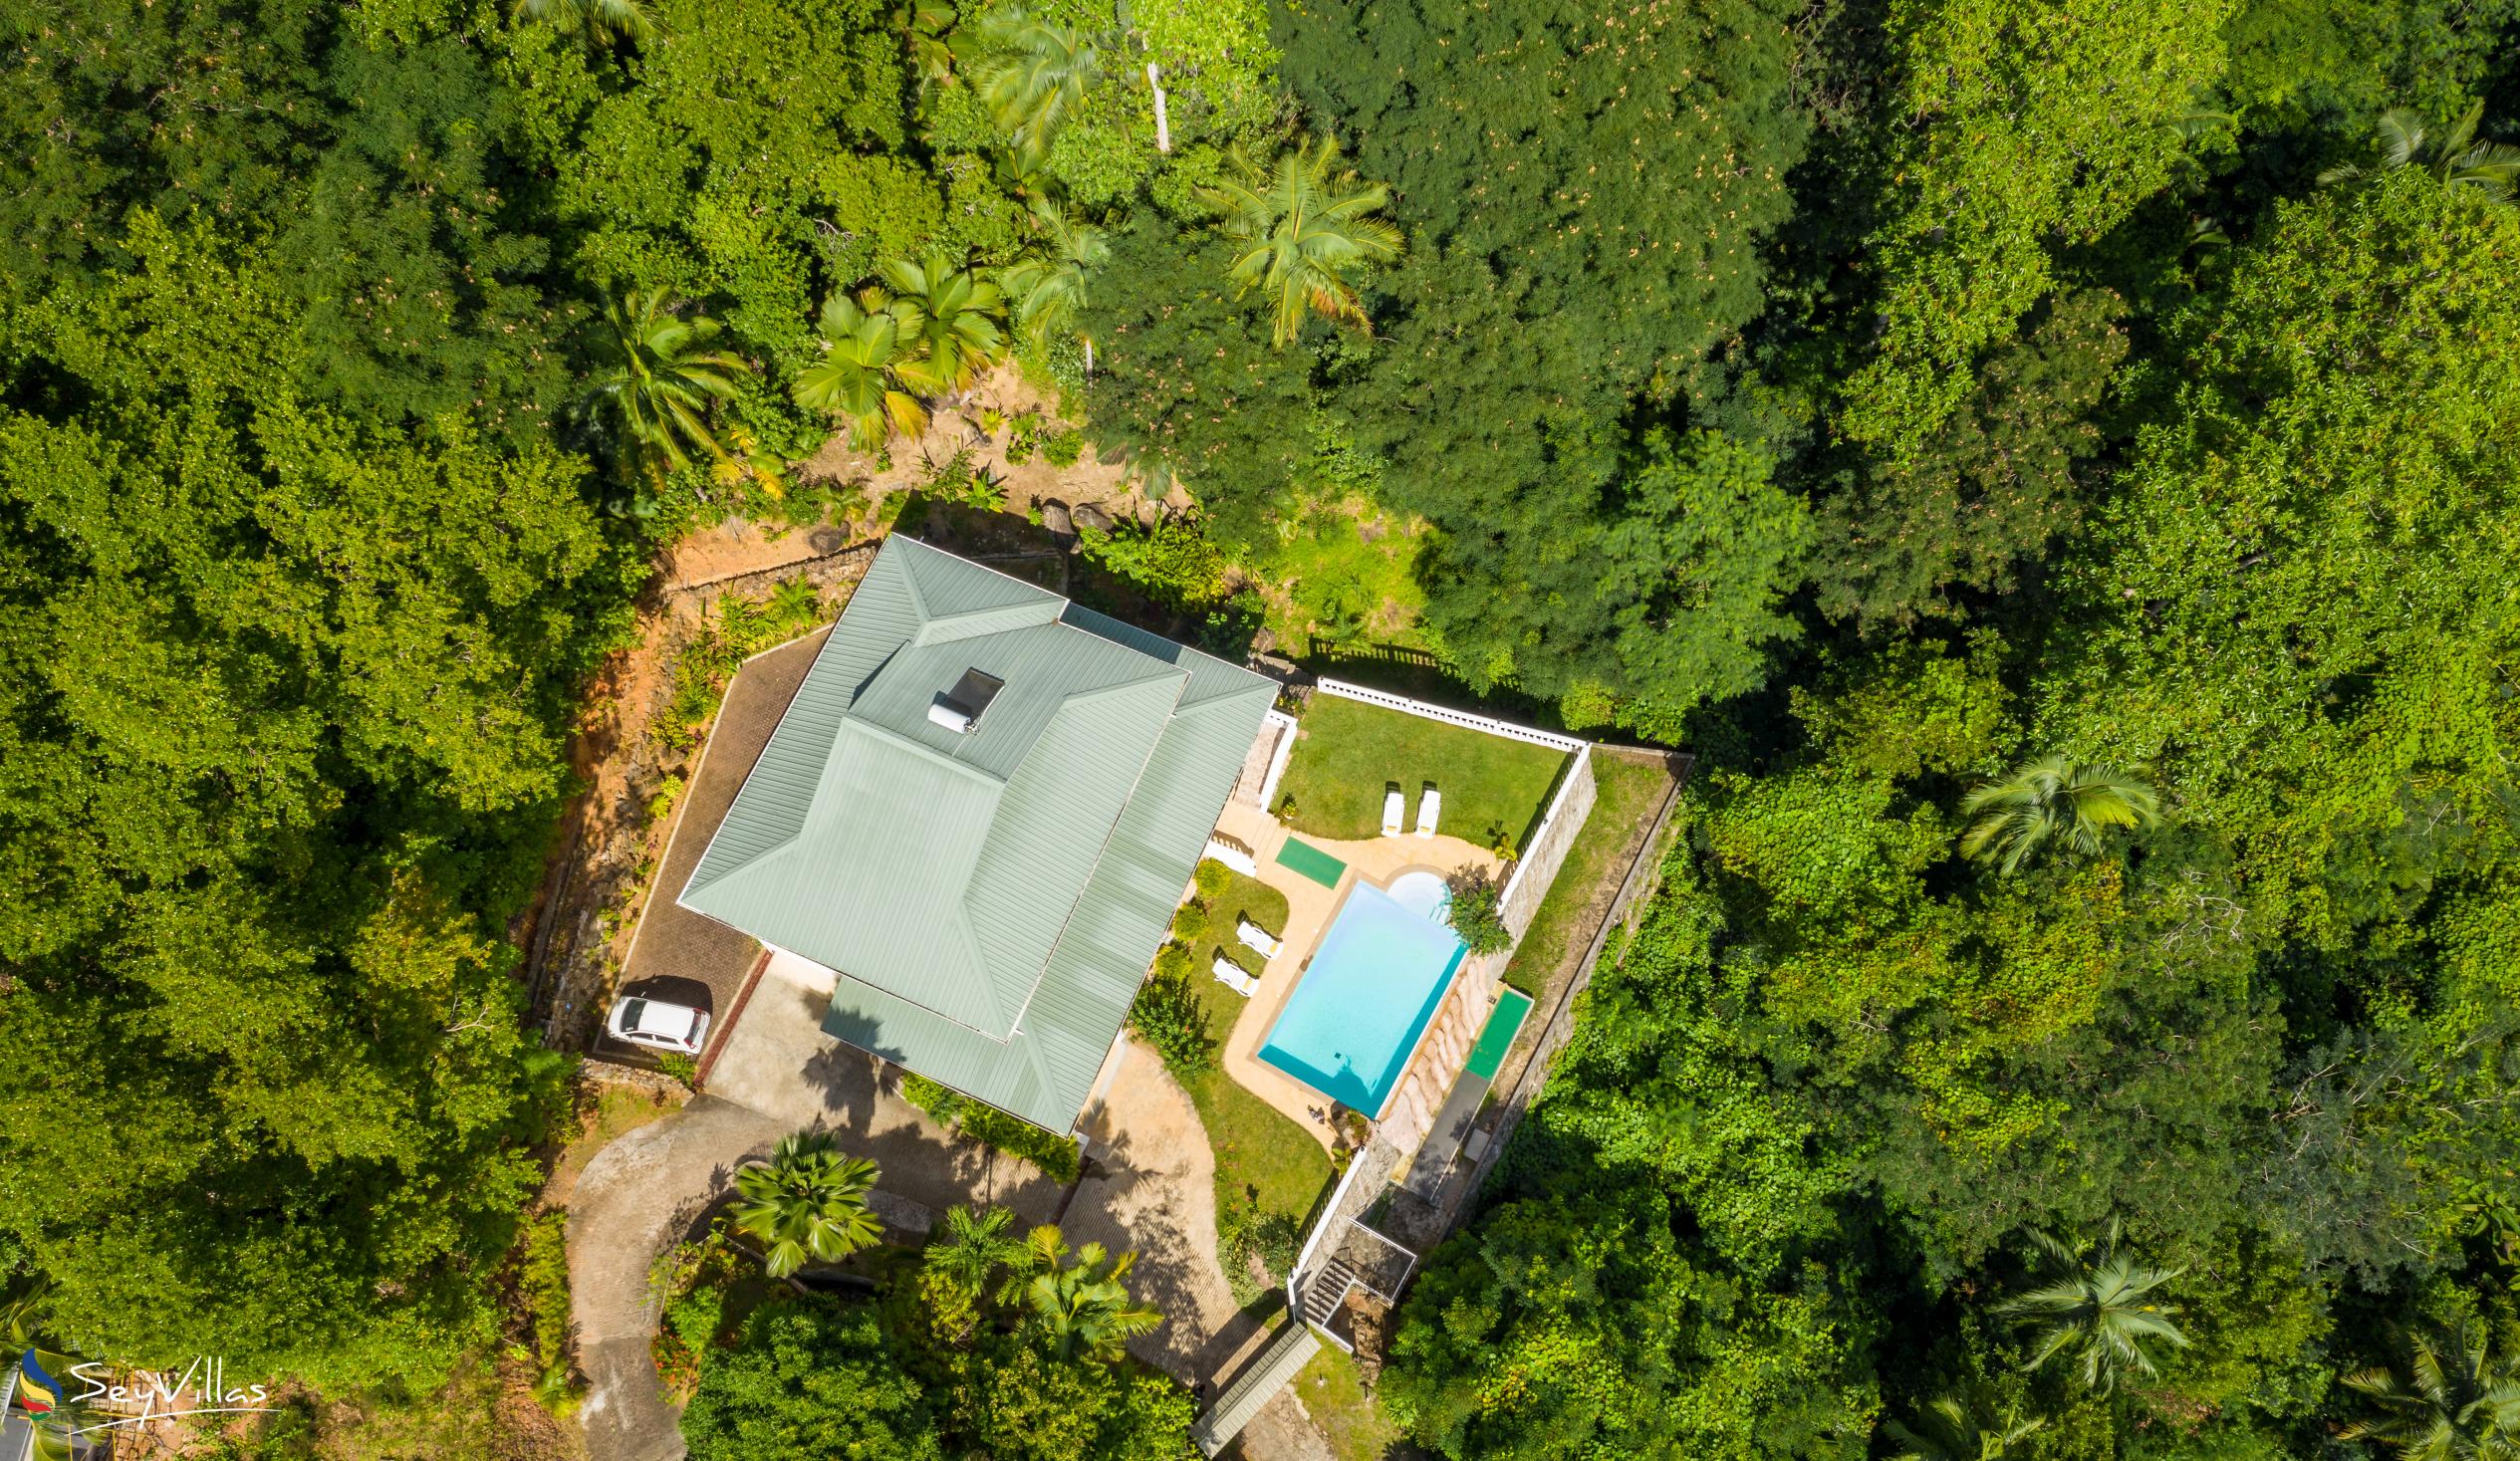 Photo 3: Villa Karibu - Outdoor area - Mahé (Seychelles)